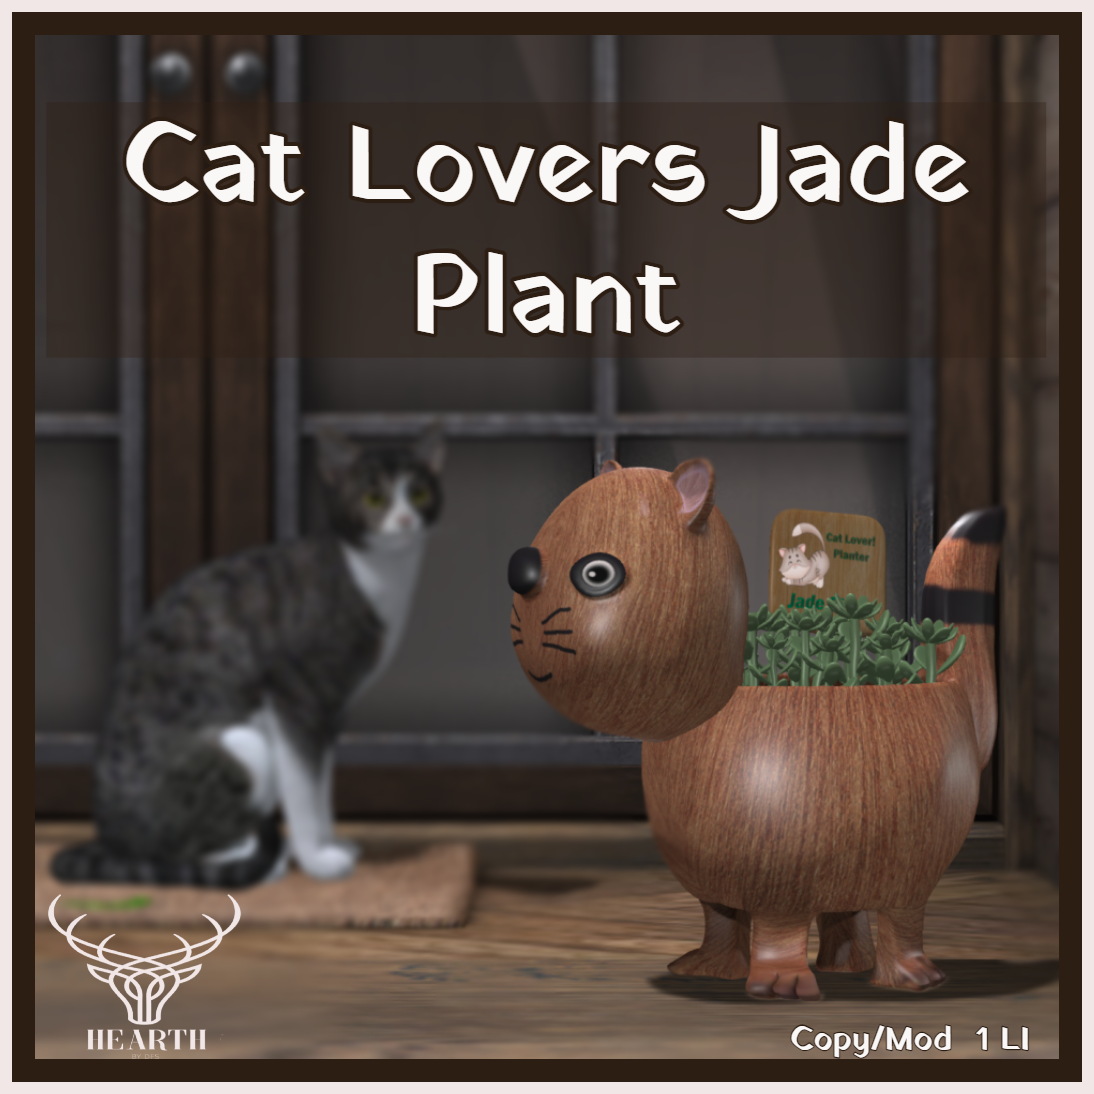 Hearth – Cat Lovers Jade Plant